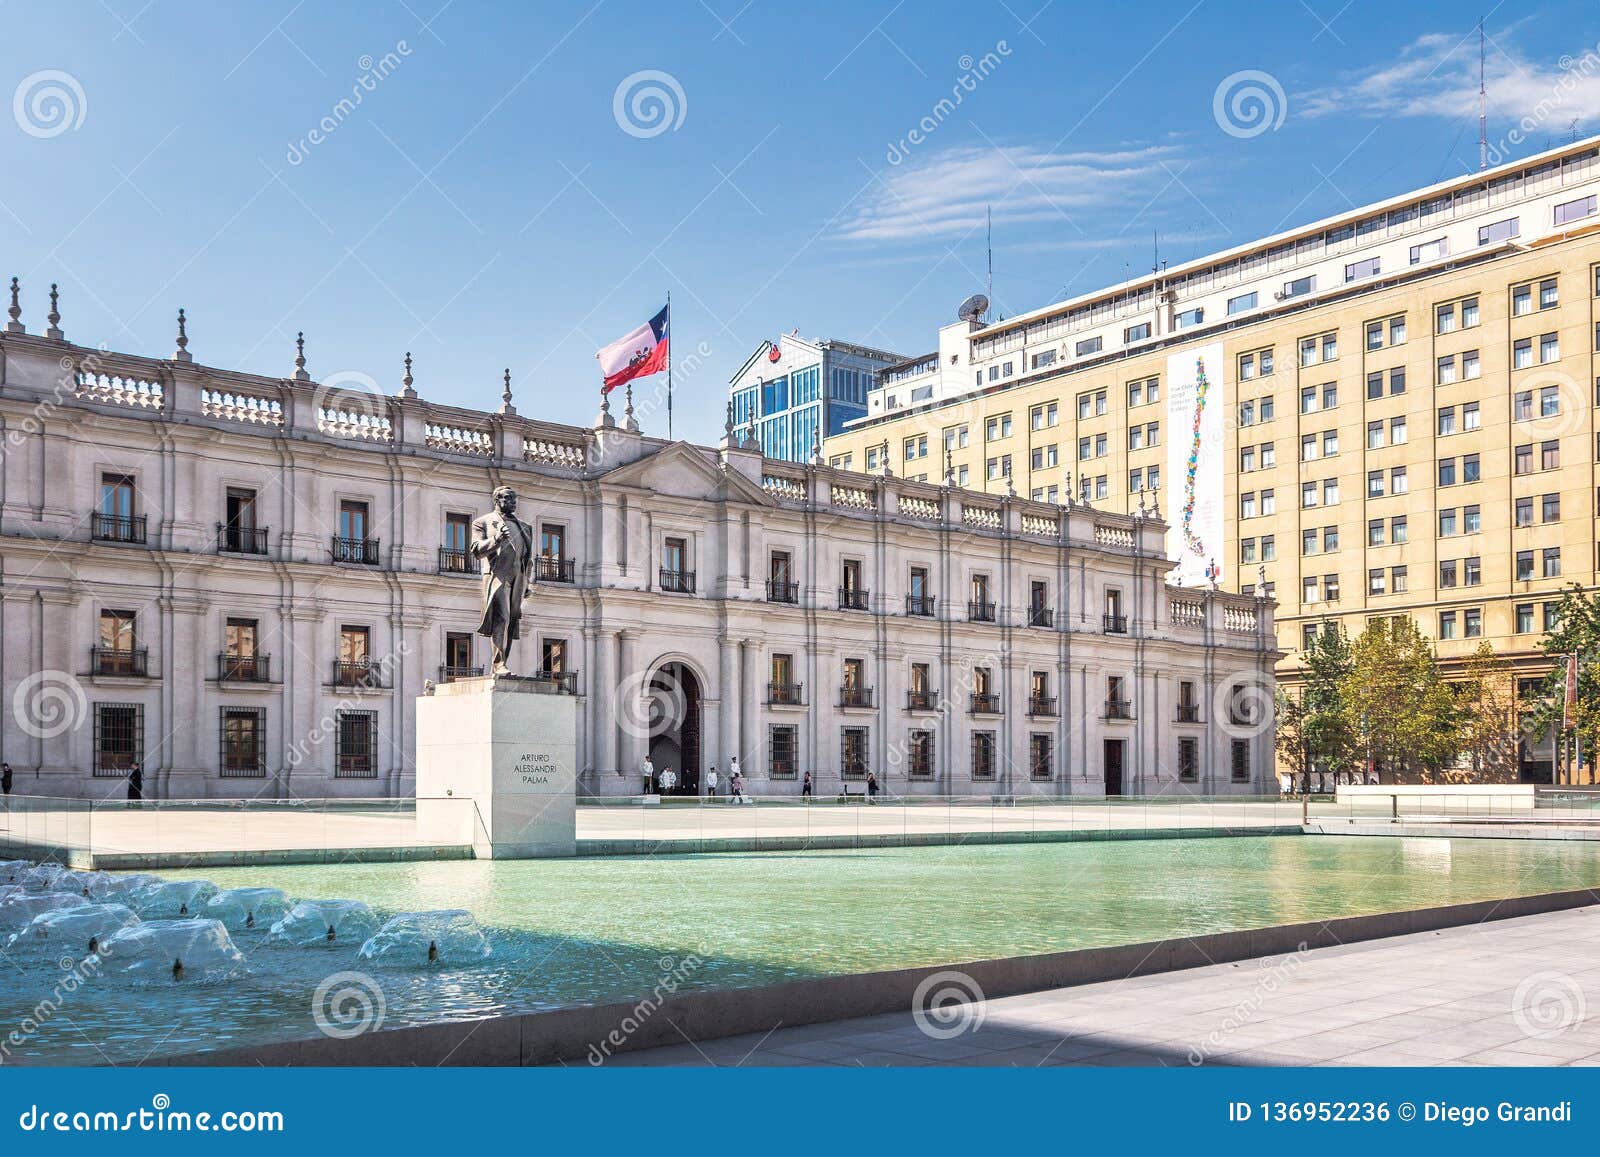 la moneda presidential palace - santiago, chile